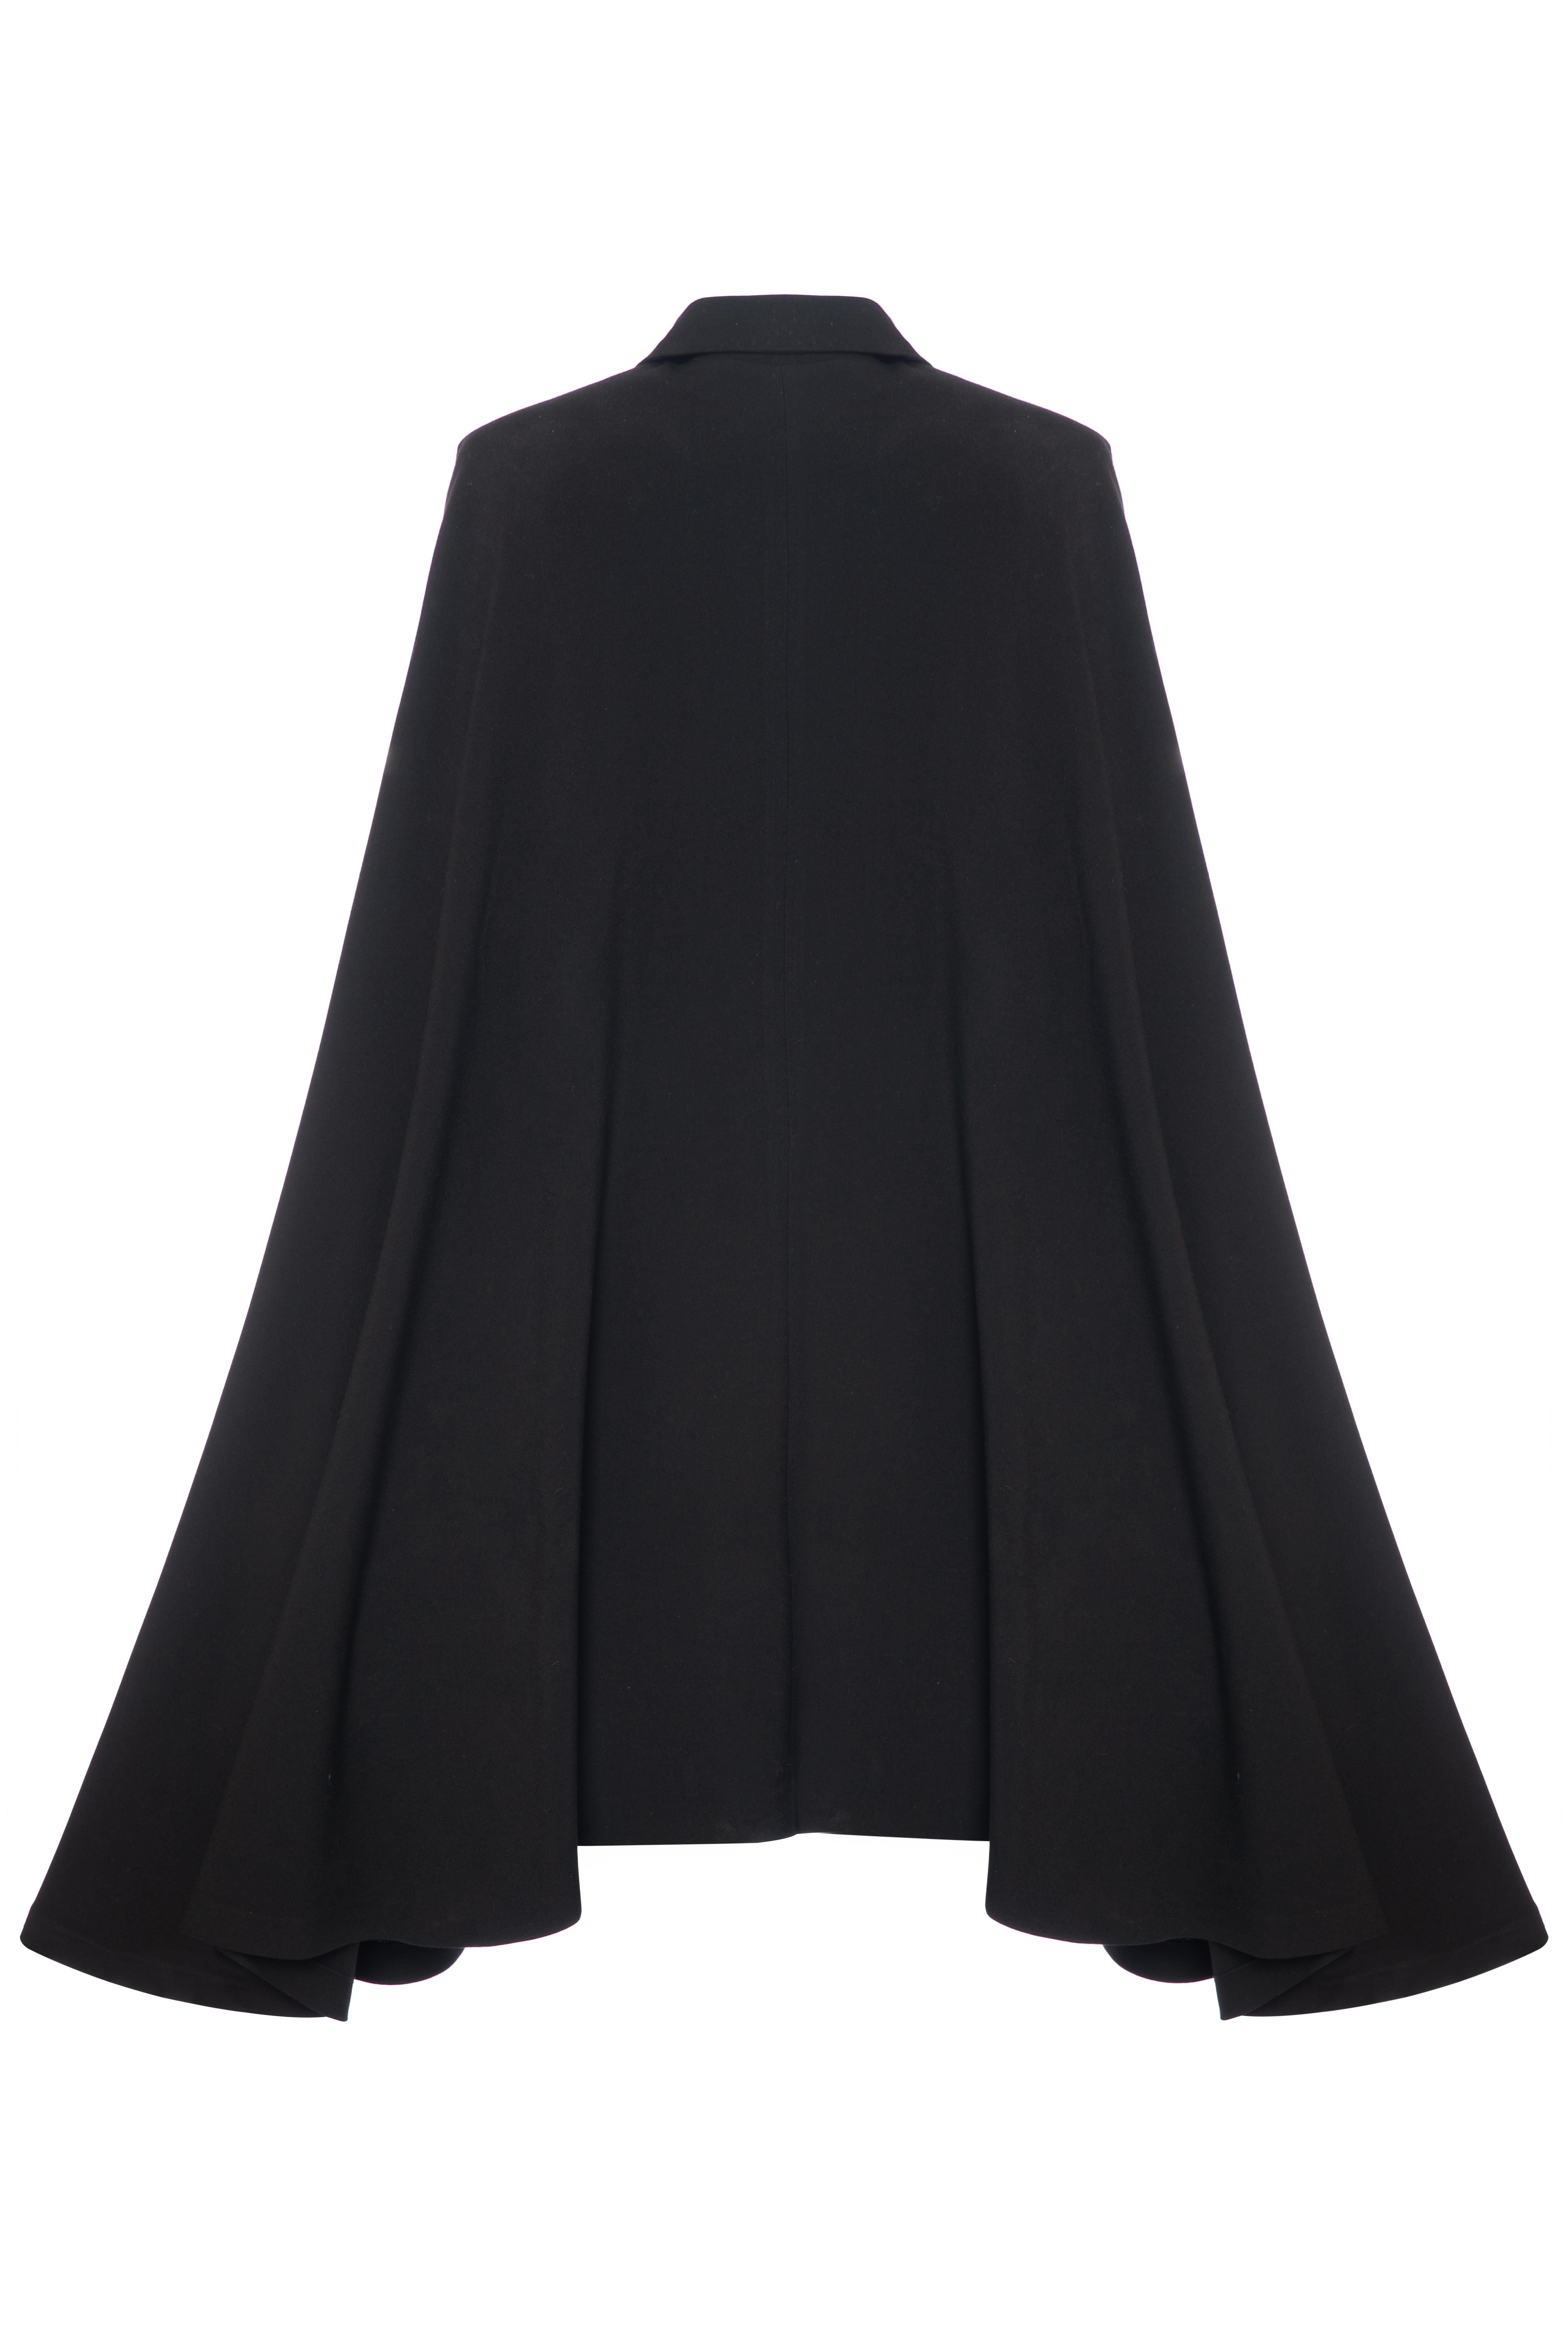 JUL | Siyah Pelerin Detaylı Ceket Elbise